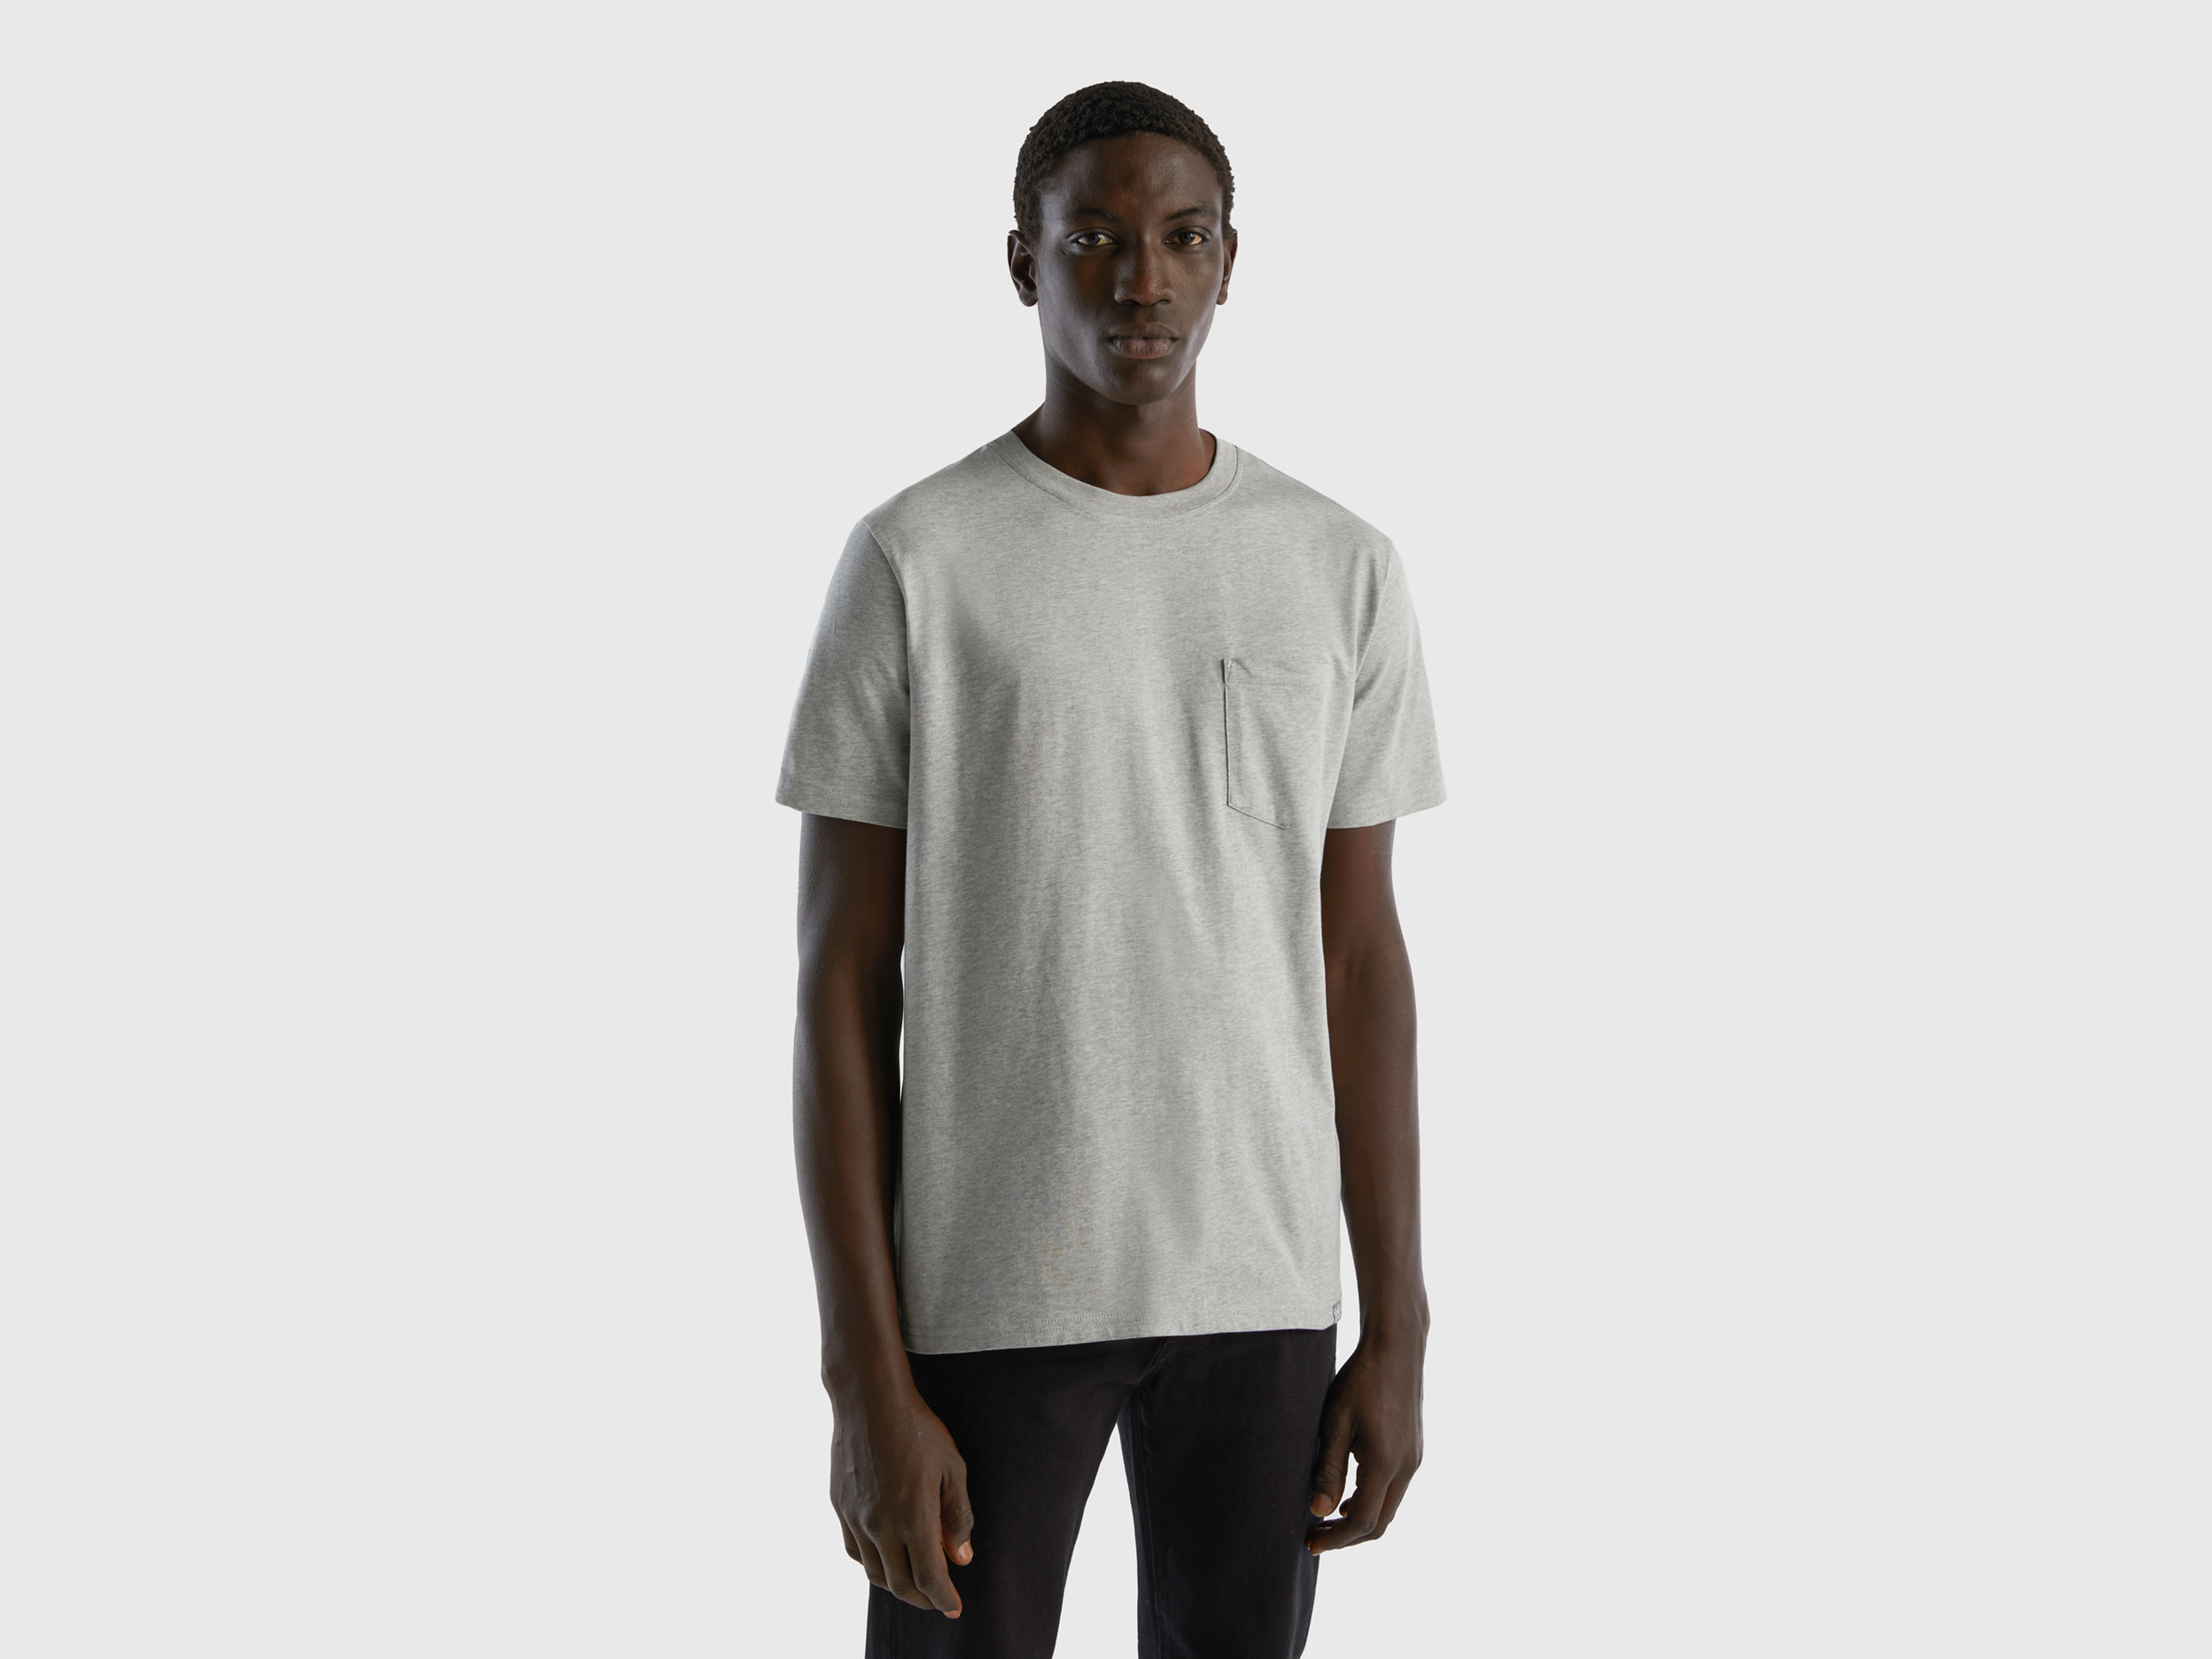 Benetton, 100% Cotton T-shirt With Pocket, size M, Light Gray, Men